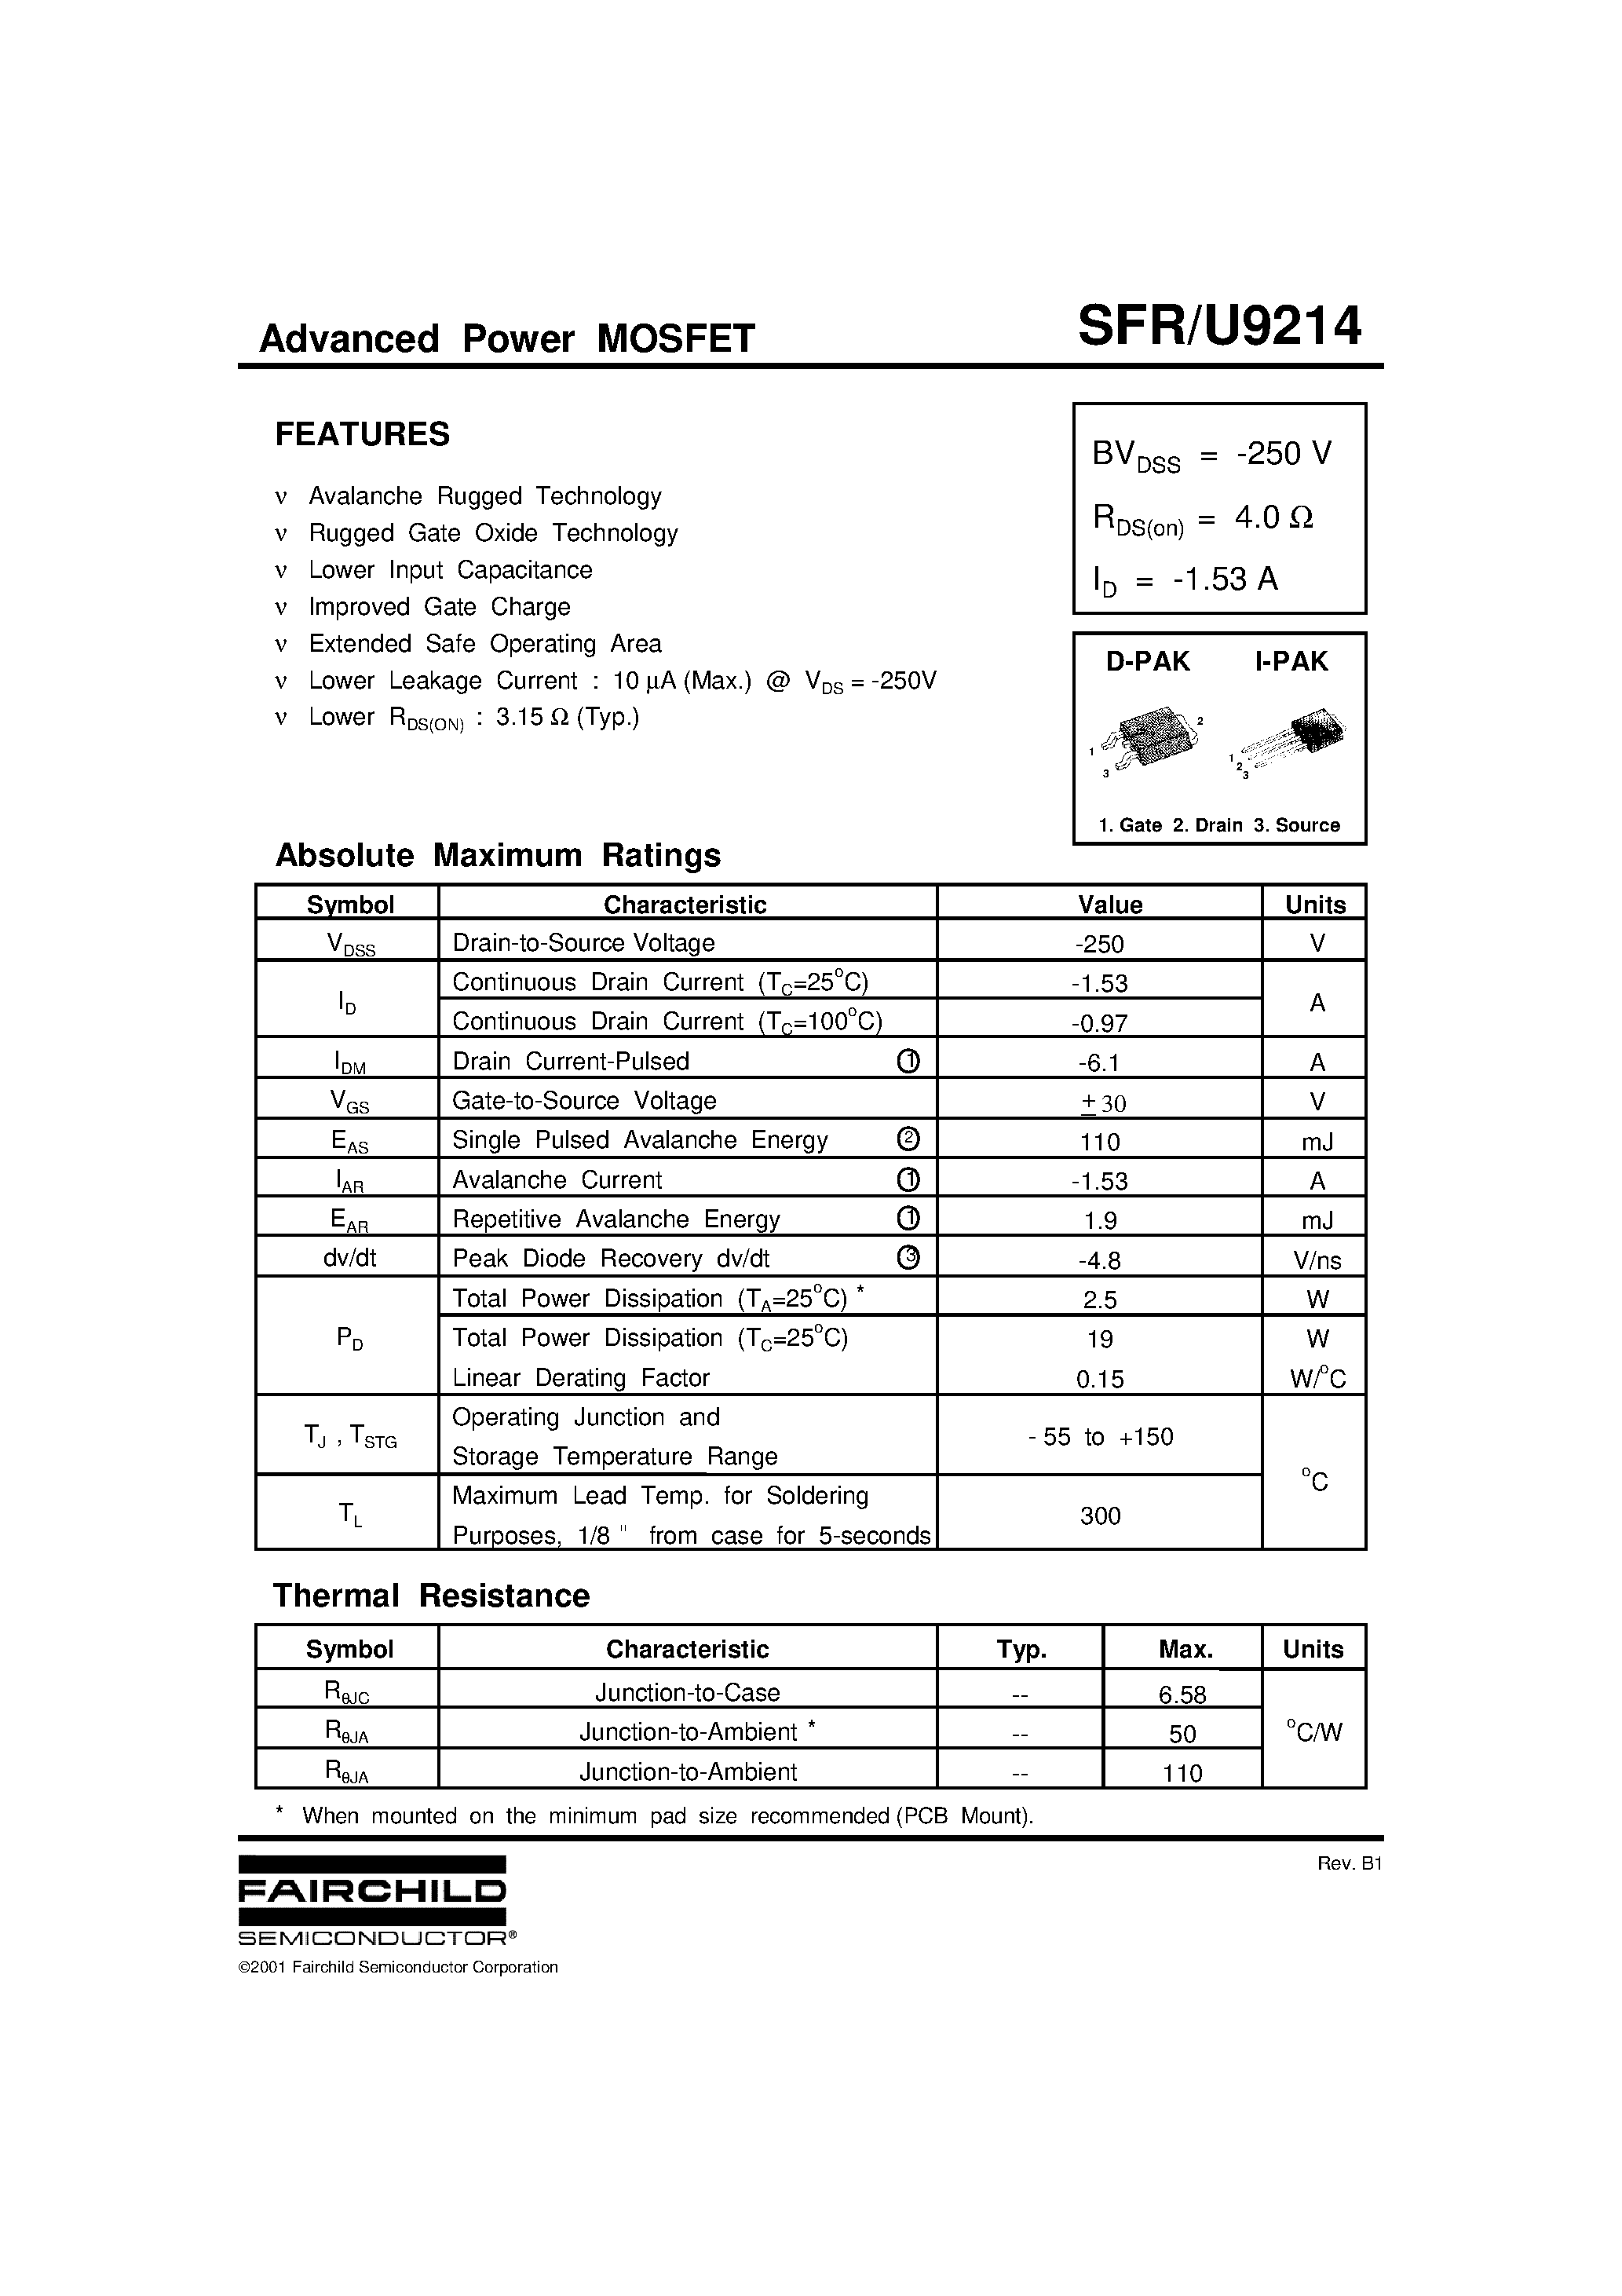 Datasheet SFR9214 - Advanced Power MOSFET page 1